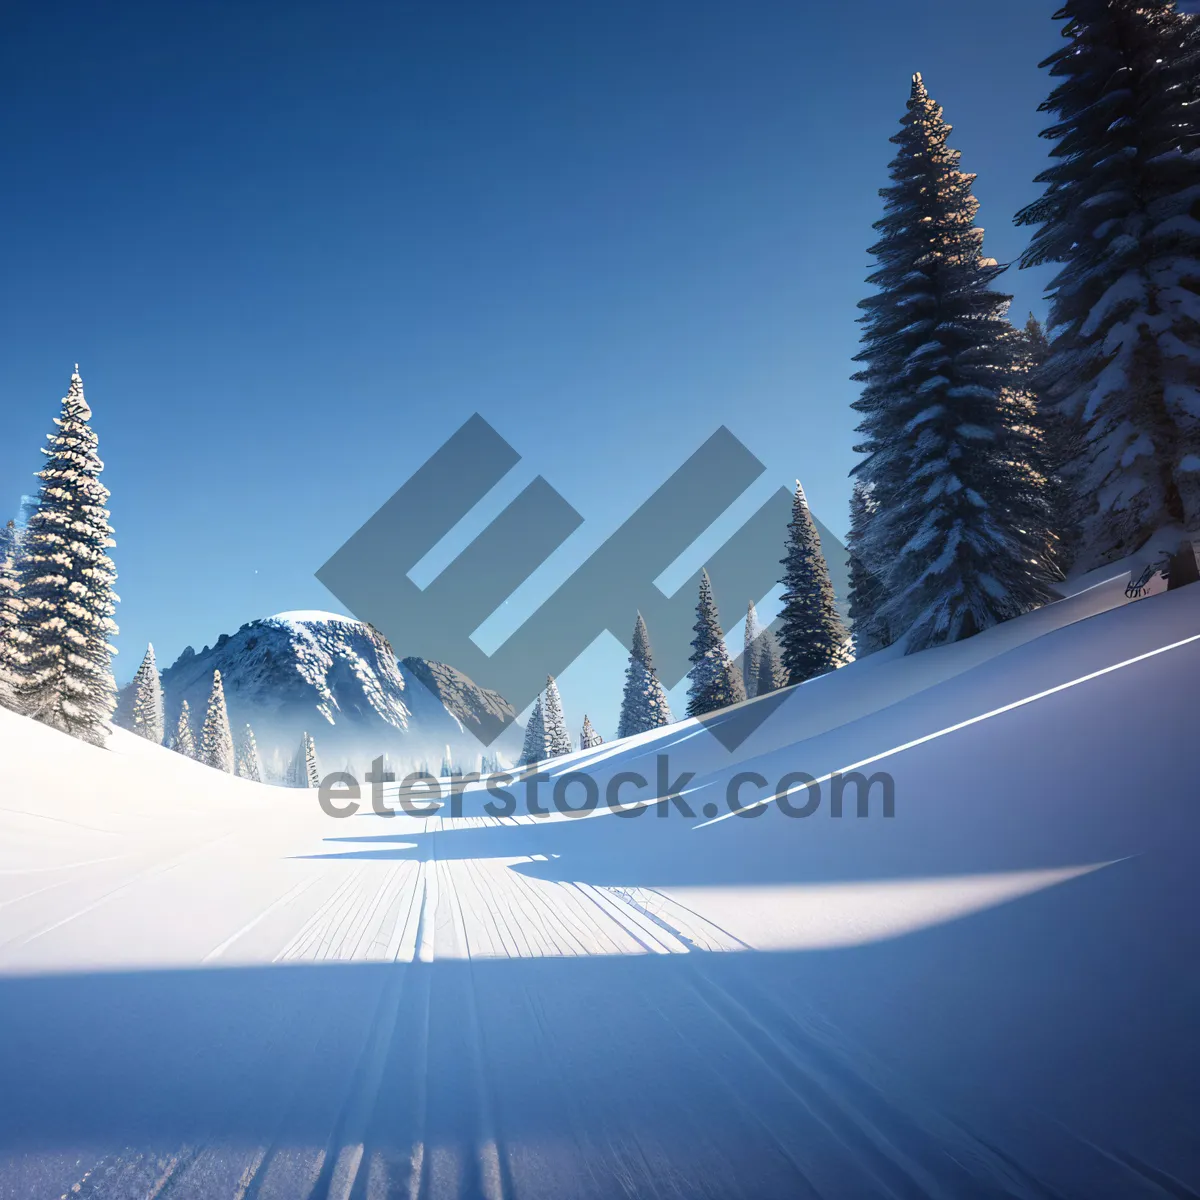 Picture of Winter Wonderland: Majestic Snowy Alpine Landscape